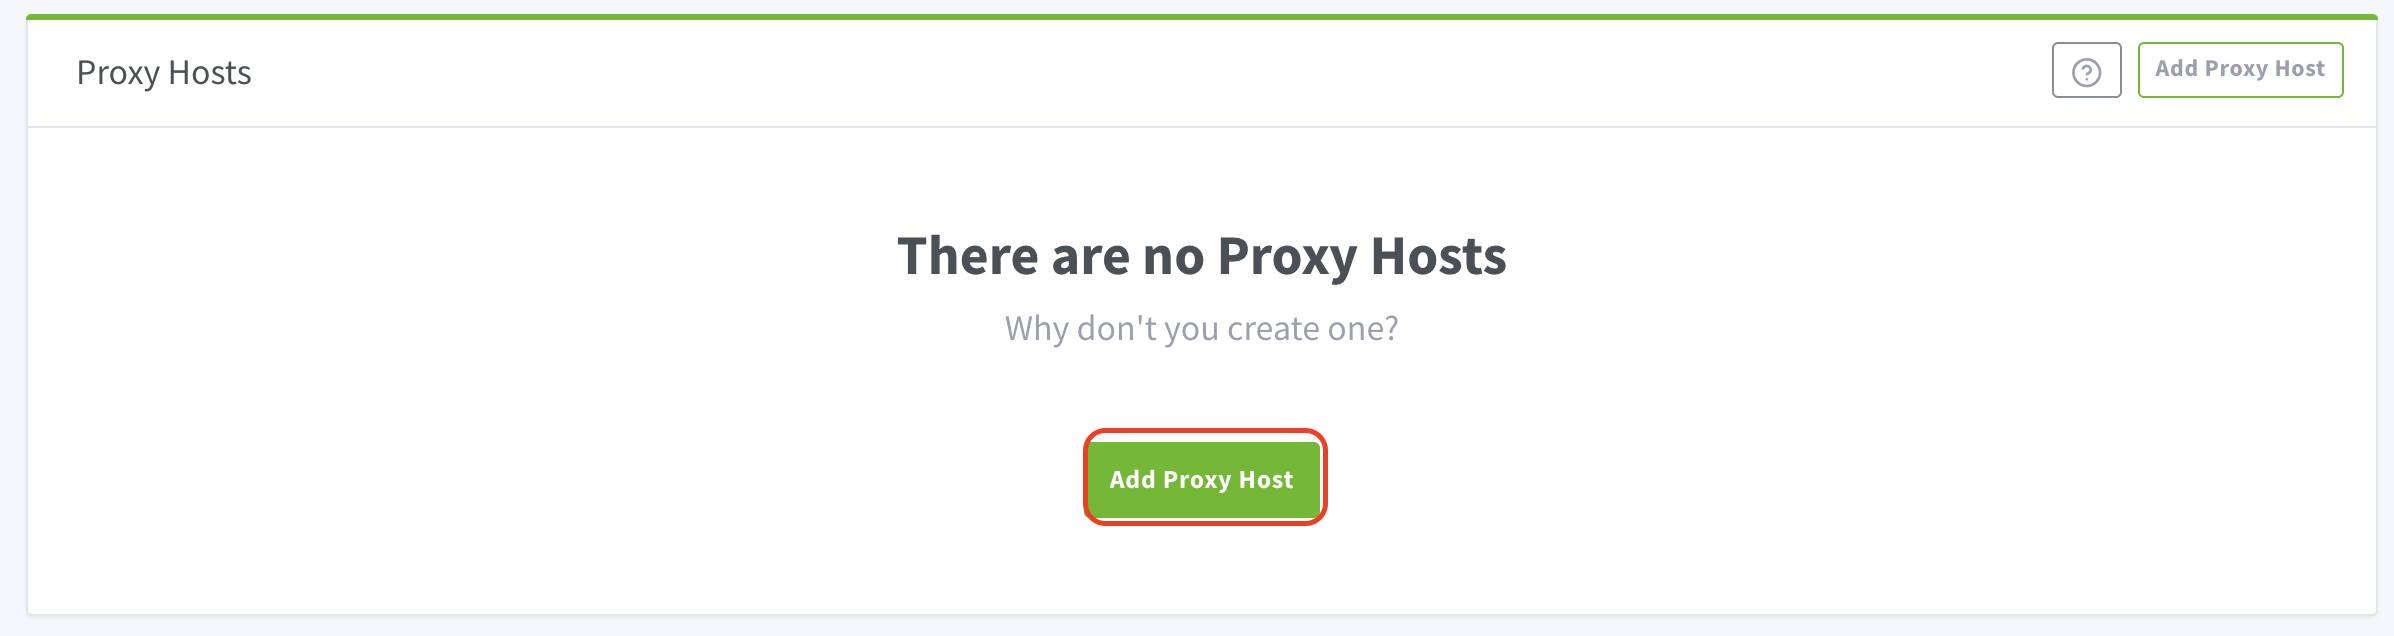 add proxy hosts